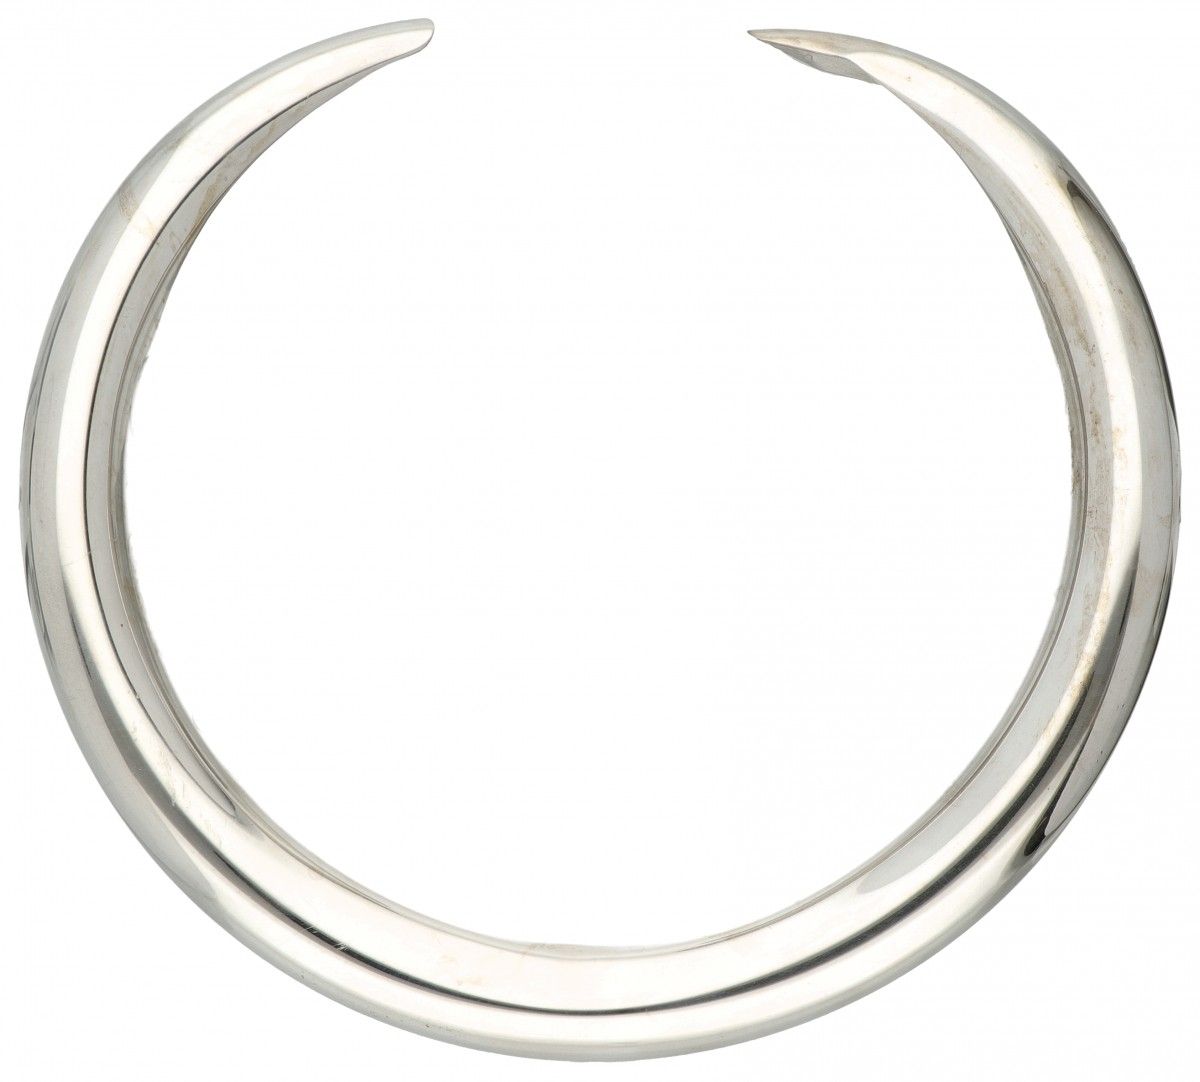 Silver Hermès collar necklace - 925/1000. Marchi: Ag 925, LG, marchi francesi. C&hellip;